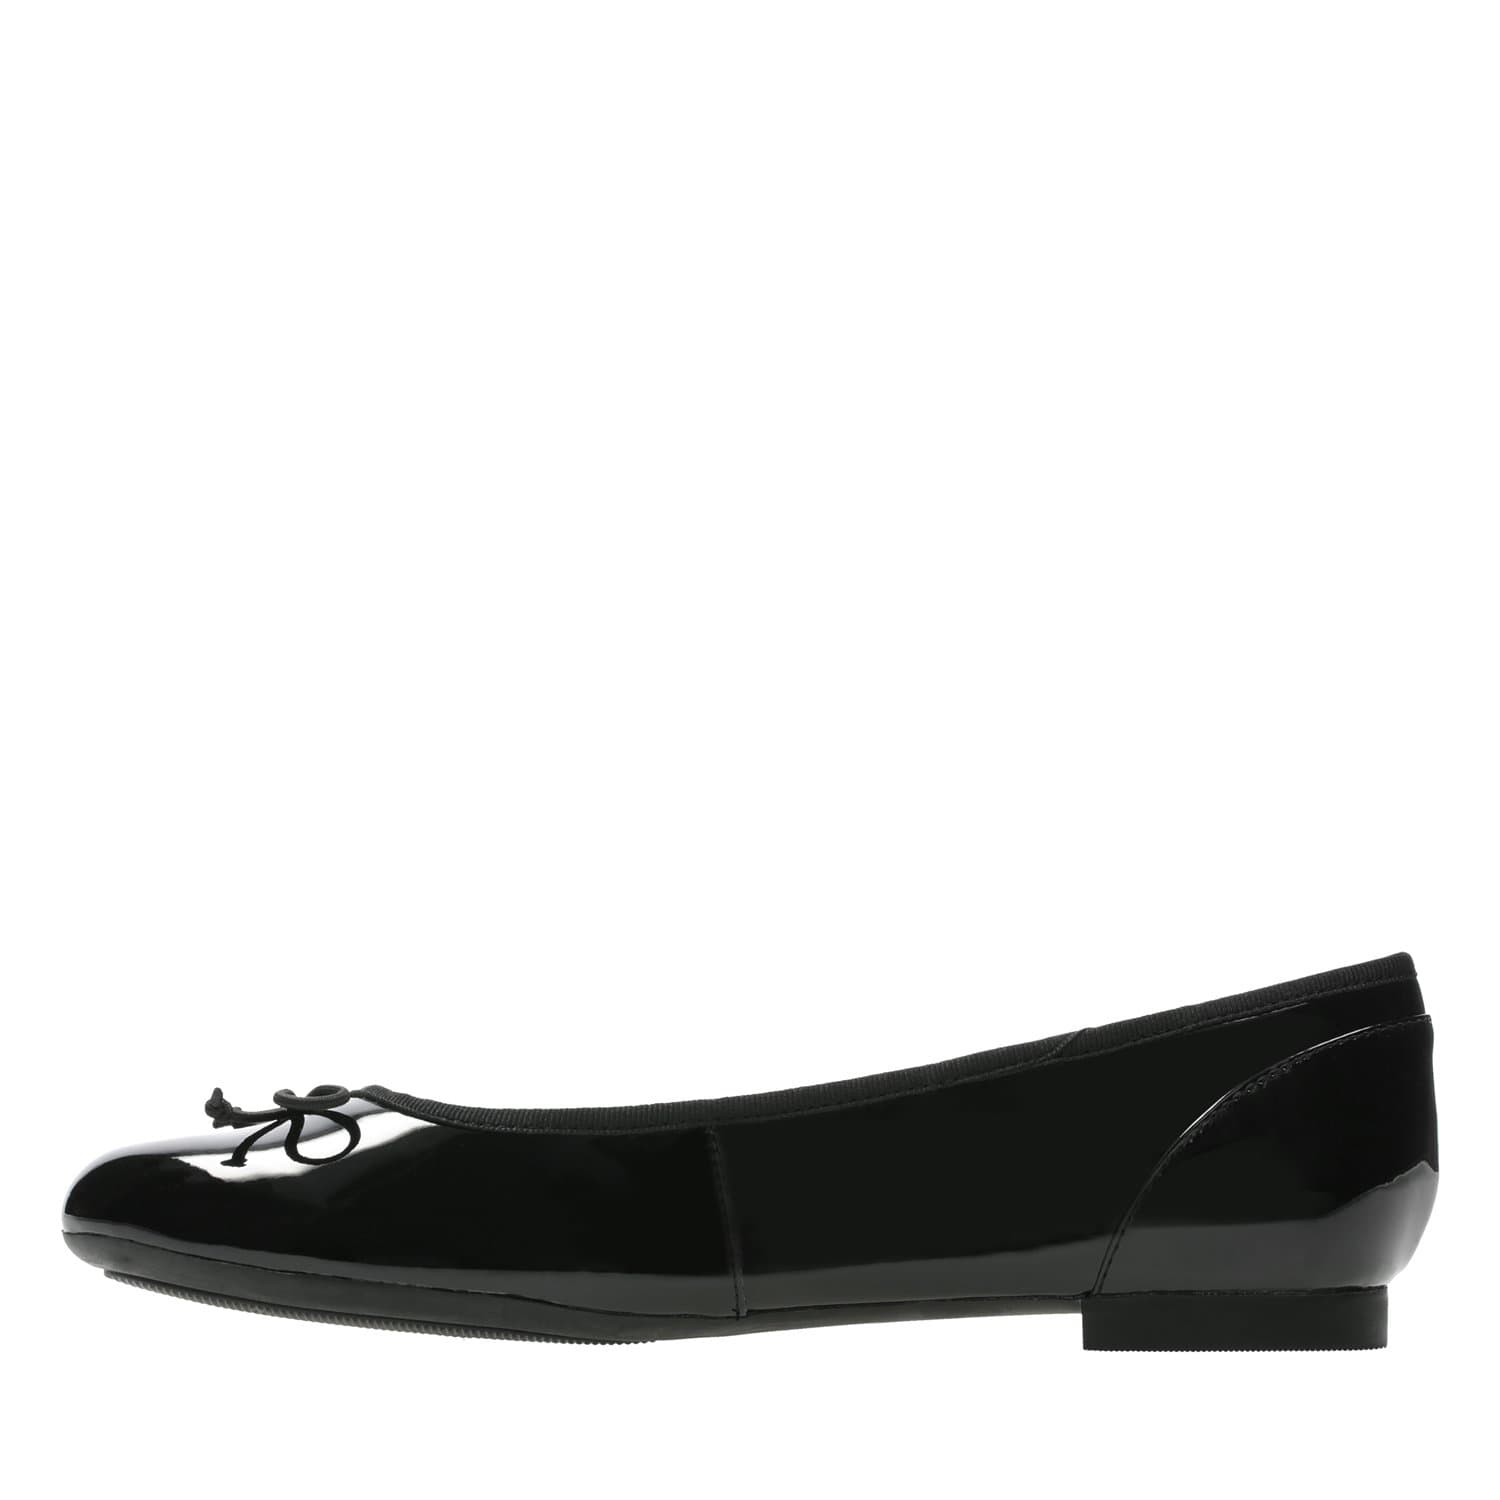 Clarks Couture Bloom - Shoes - Black Pat - 261154754 - D Width (Standard Fit)